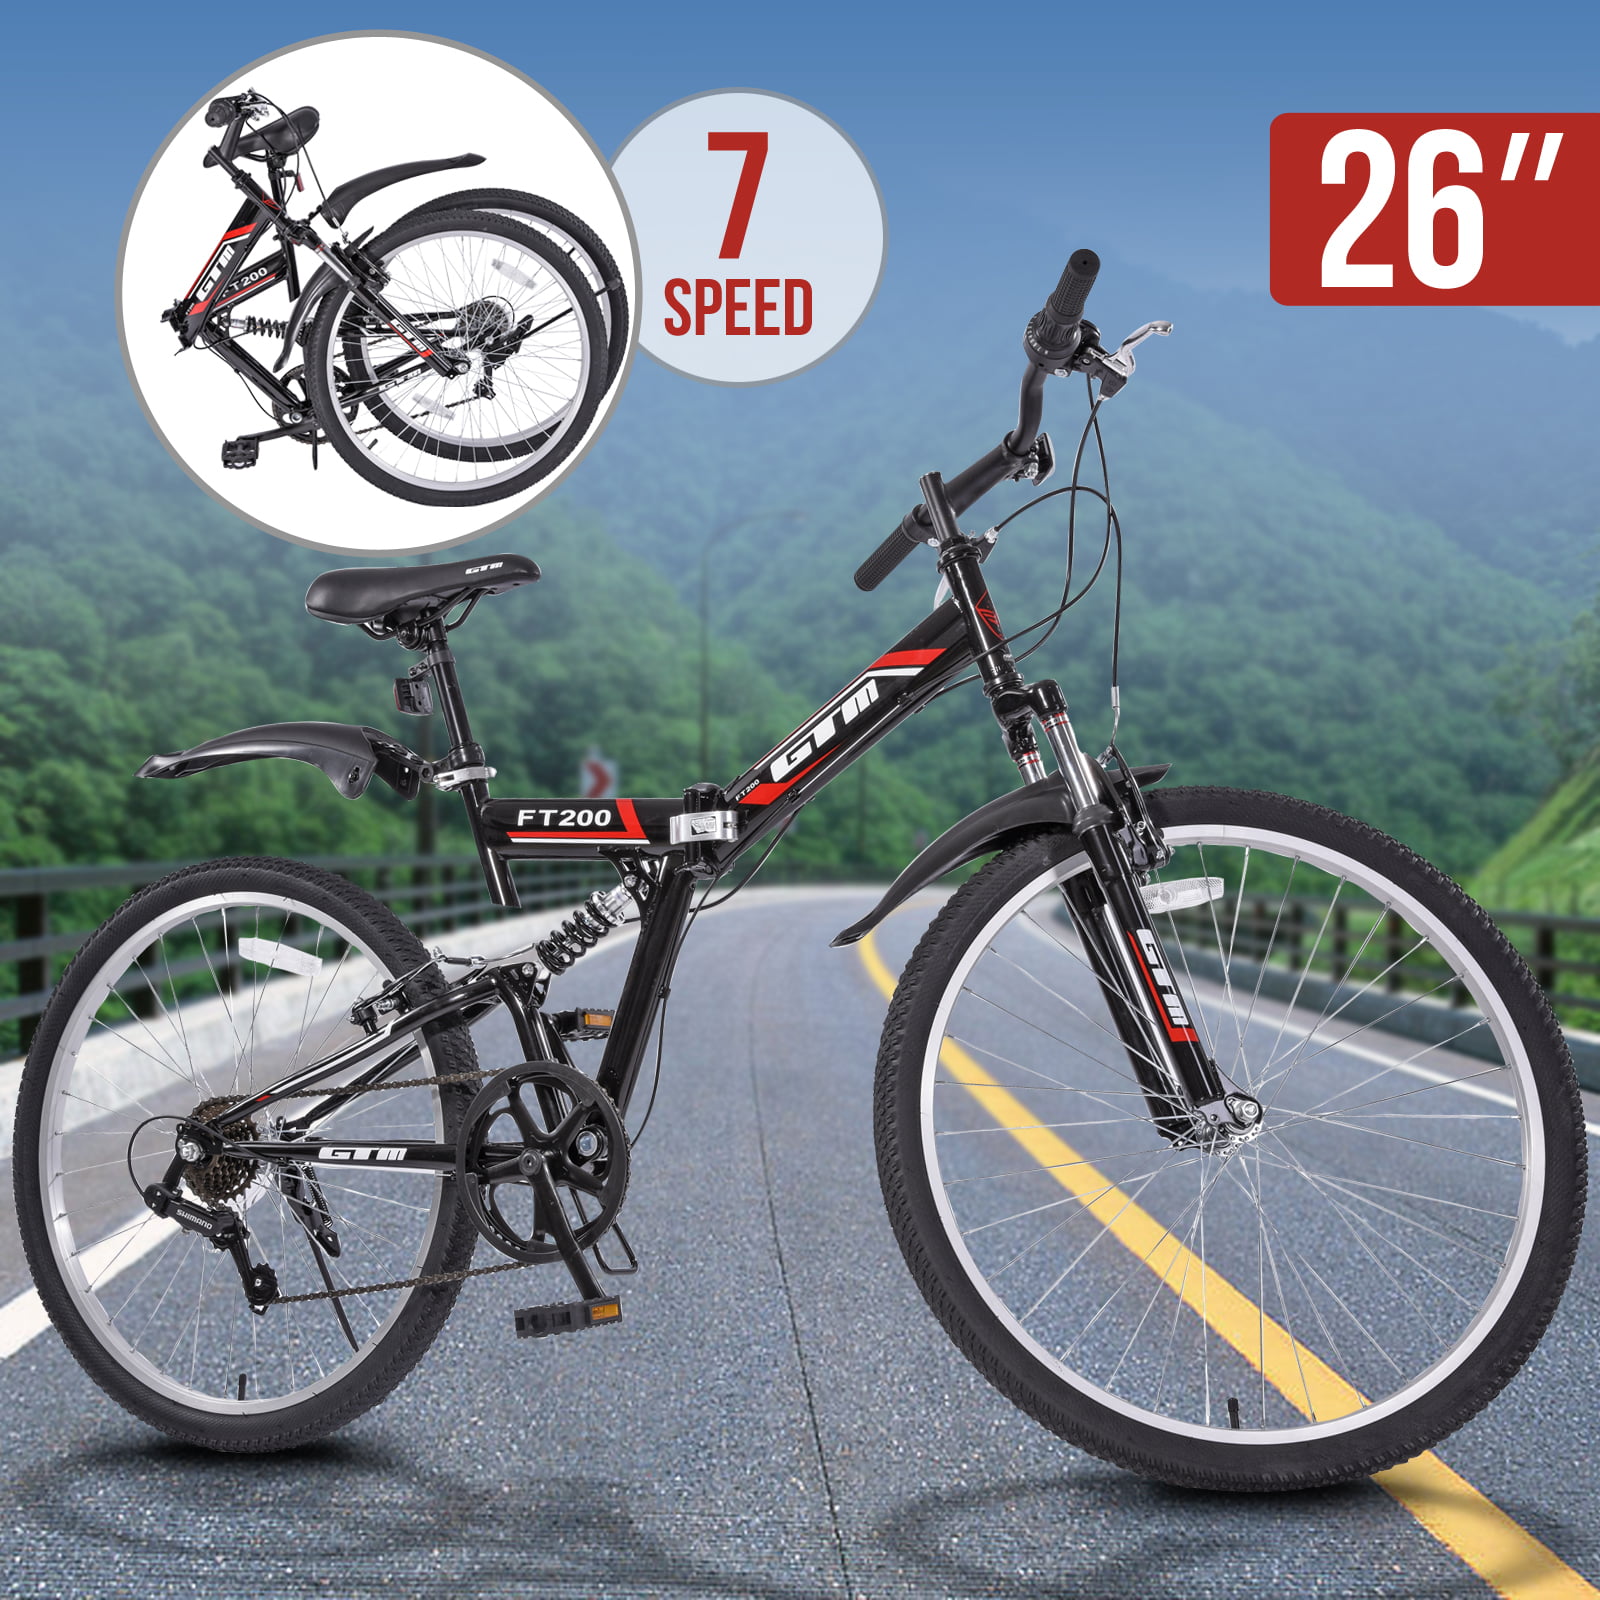 26" Folding Mountain Bike 7 Speed Hybrid Bicycle Shimano Full Suspension Sports 